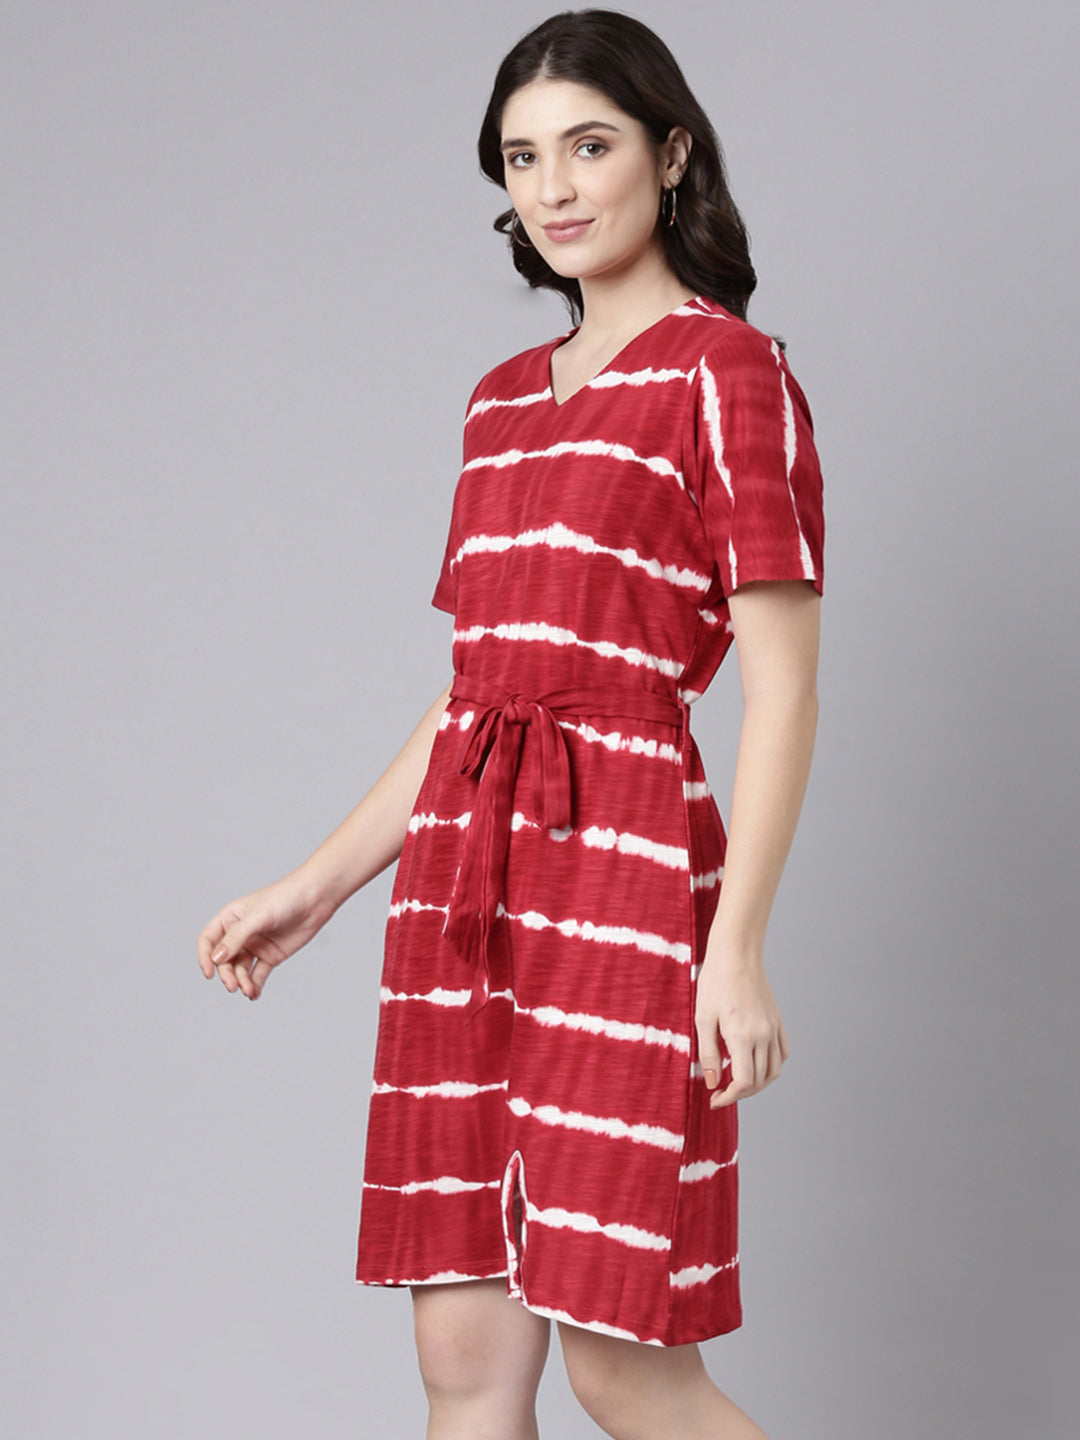 TheShaili Cotton Red Knee Length Dress/V- Neck Half Sleeves Tie-Dye Design Dresses for Women and Girls